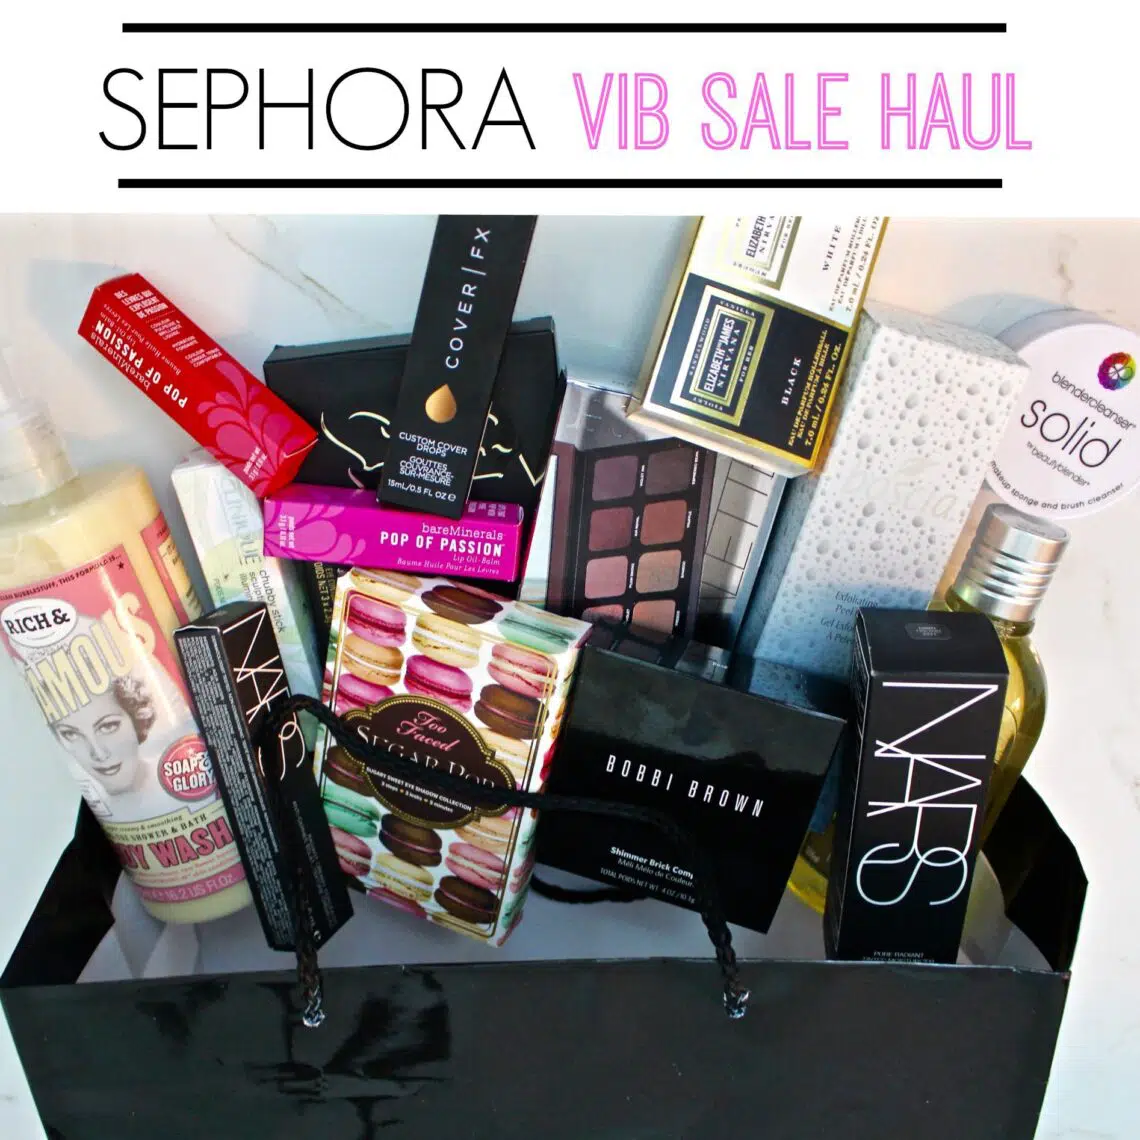 Sephora beauty insider sale haul